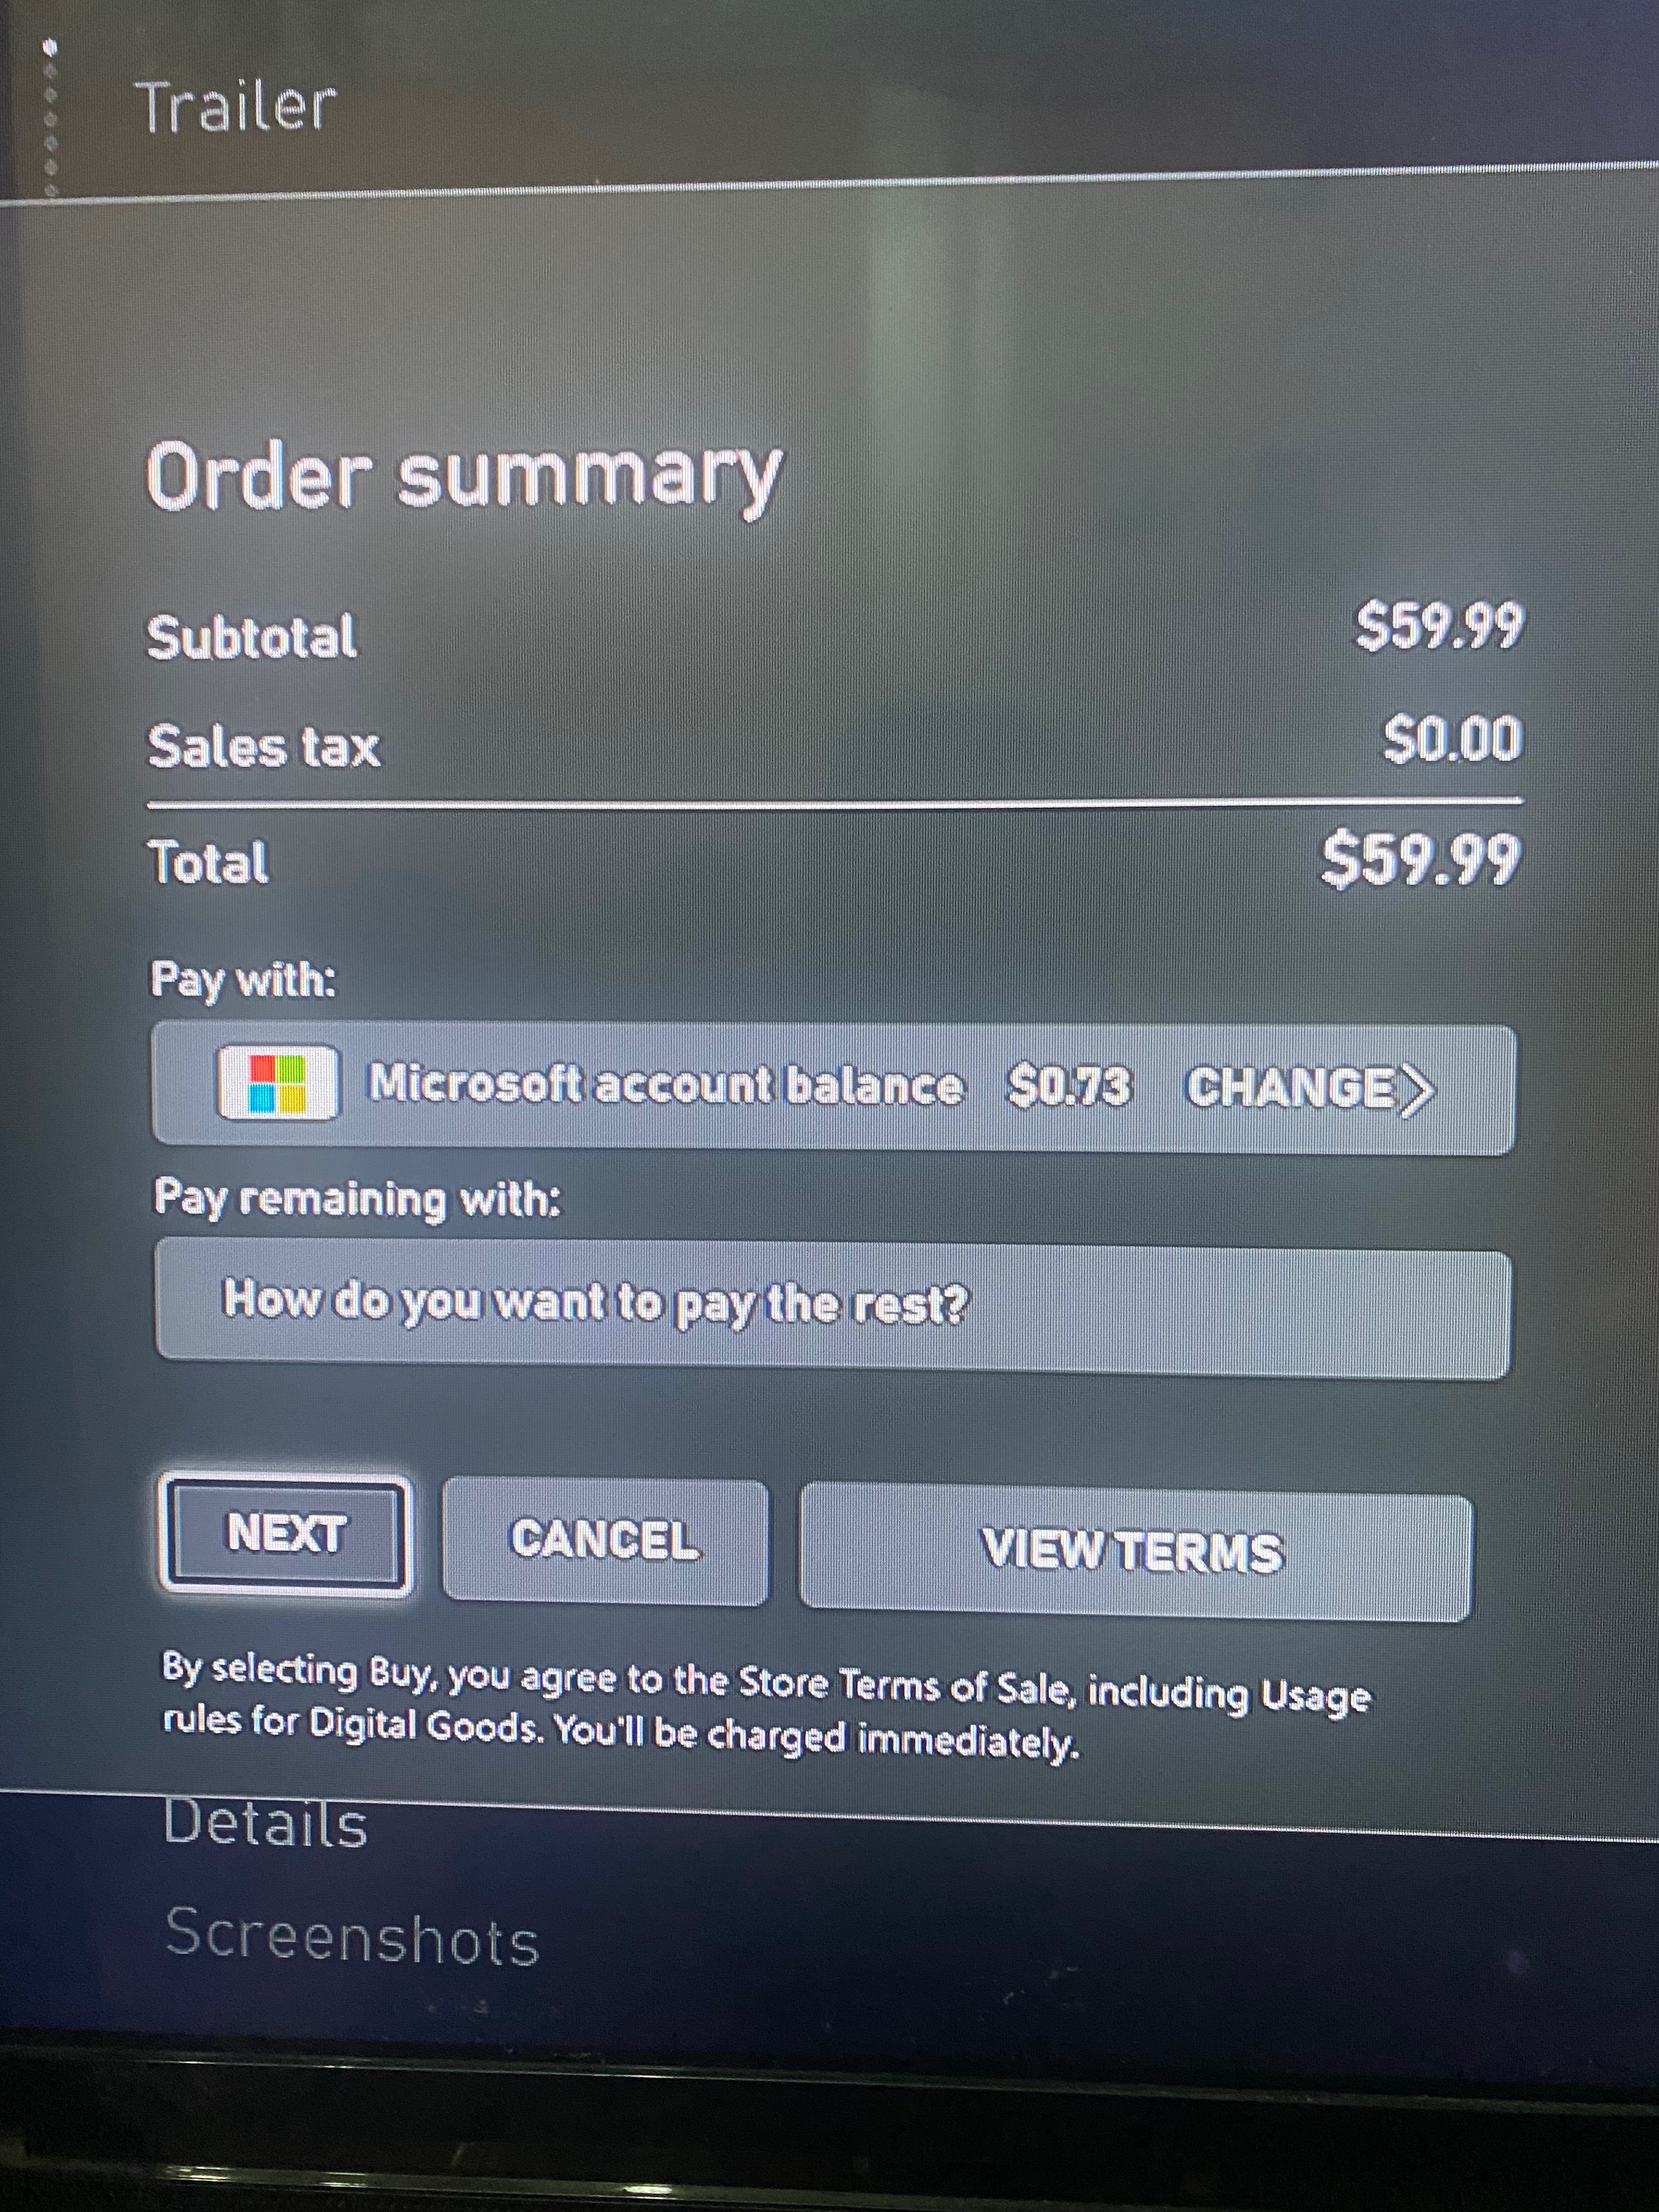 How Do I Check My Xbox Gift Card Balance?